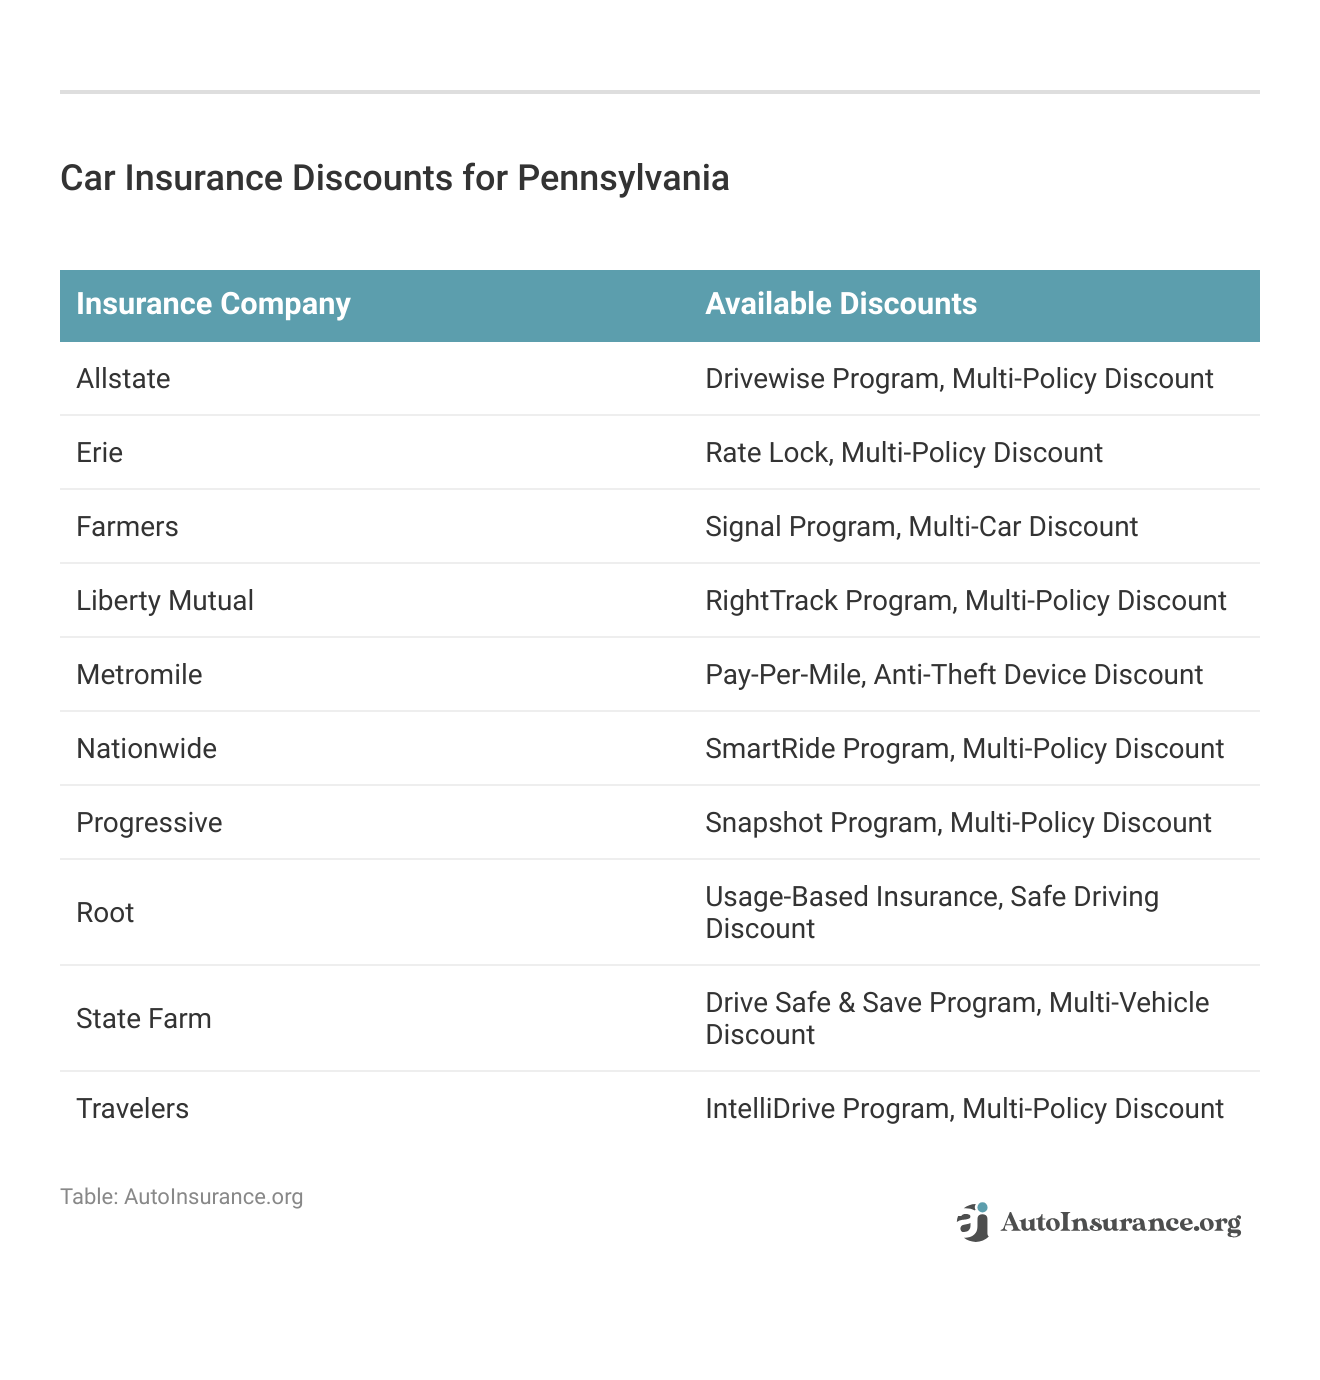 <h3>Car Insurance Discounts for Pennsylvania</h3>